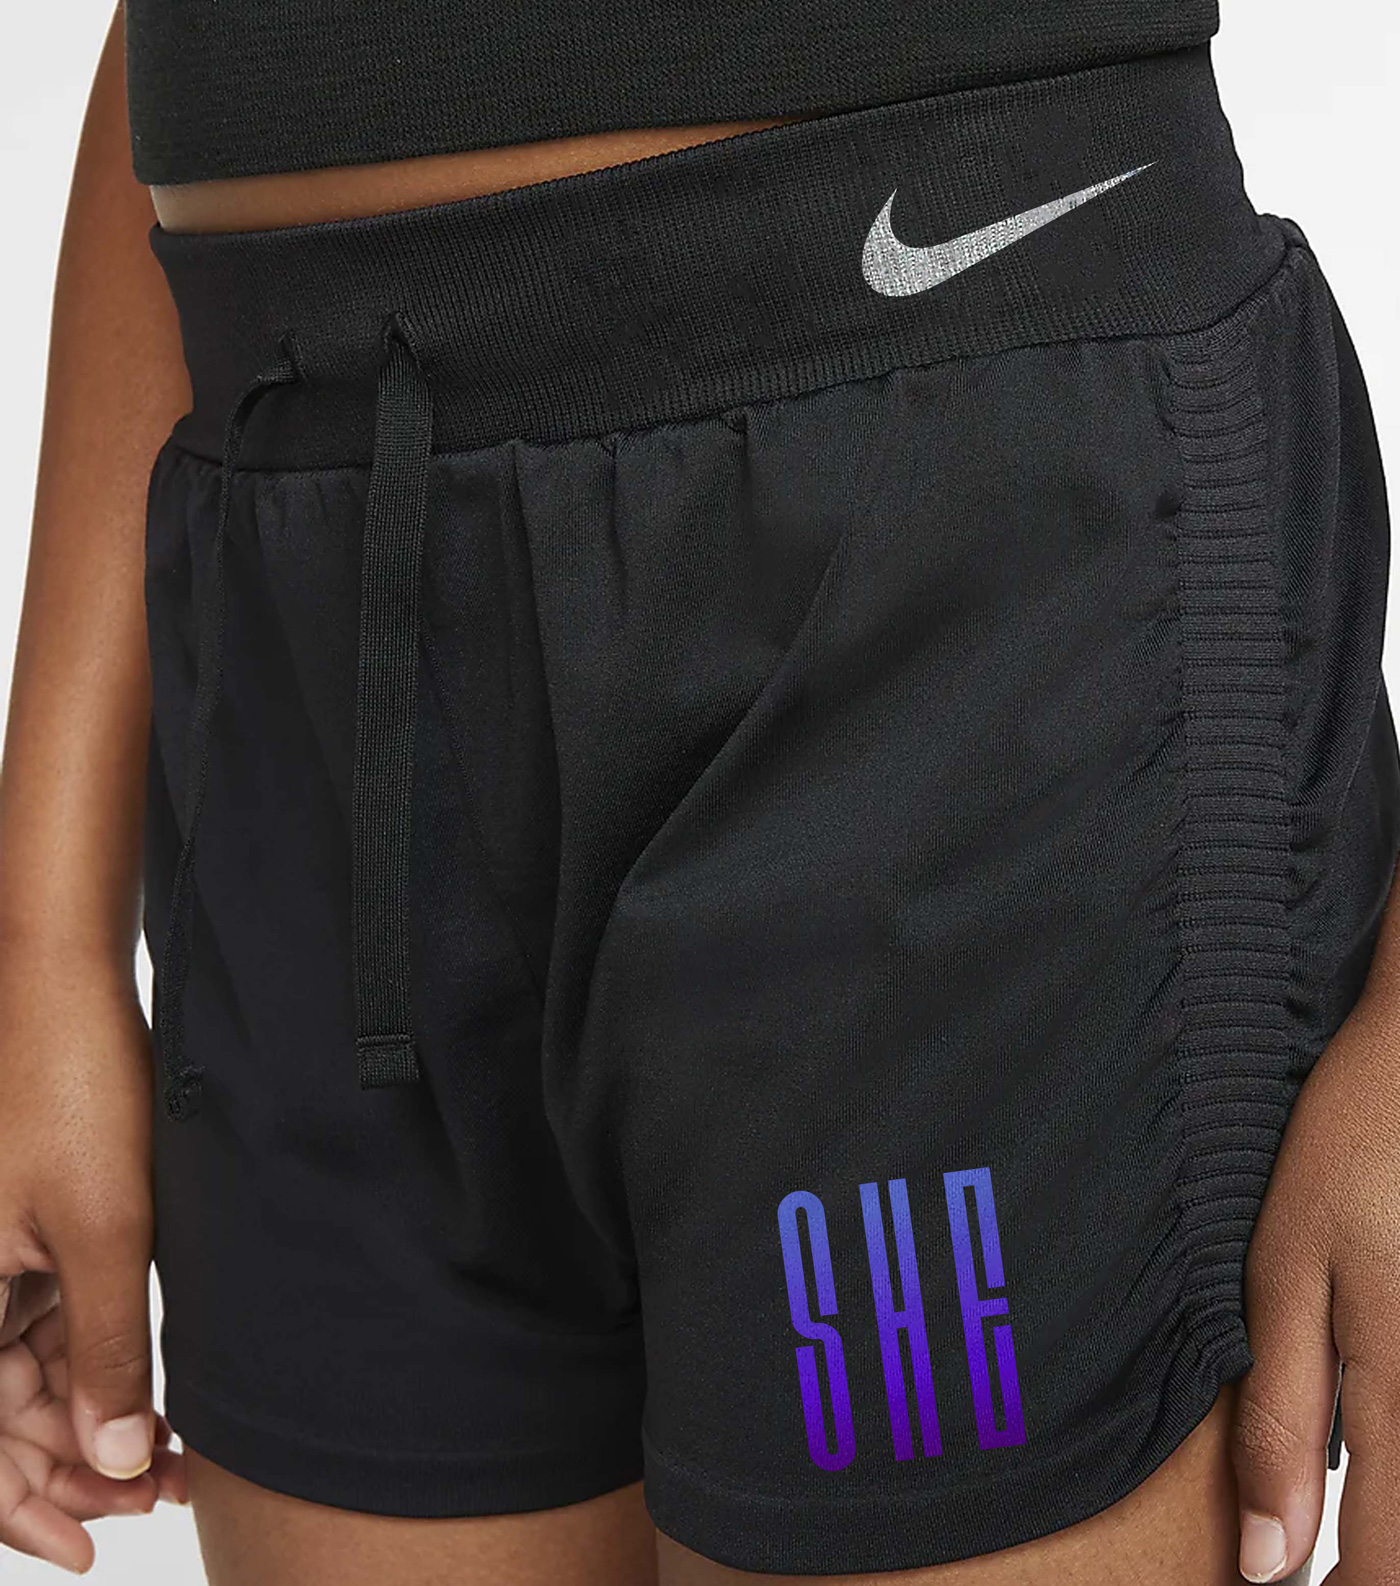 Karroach-Nike-clothing01